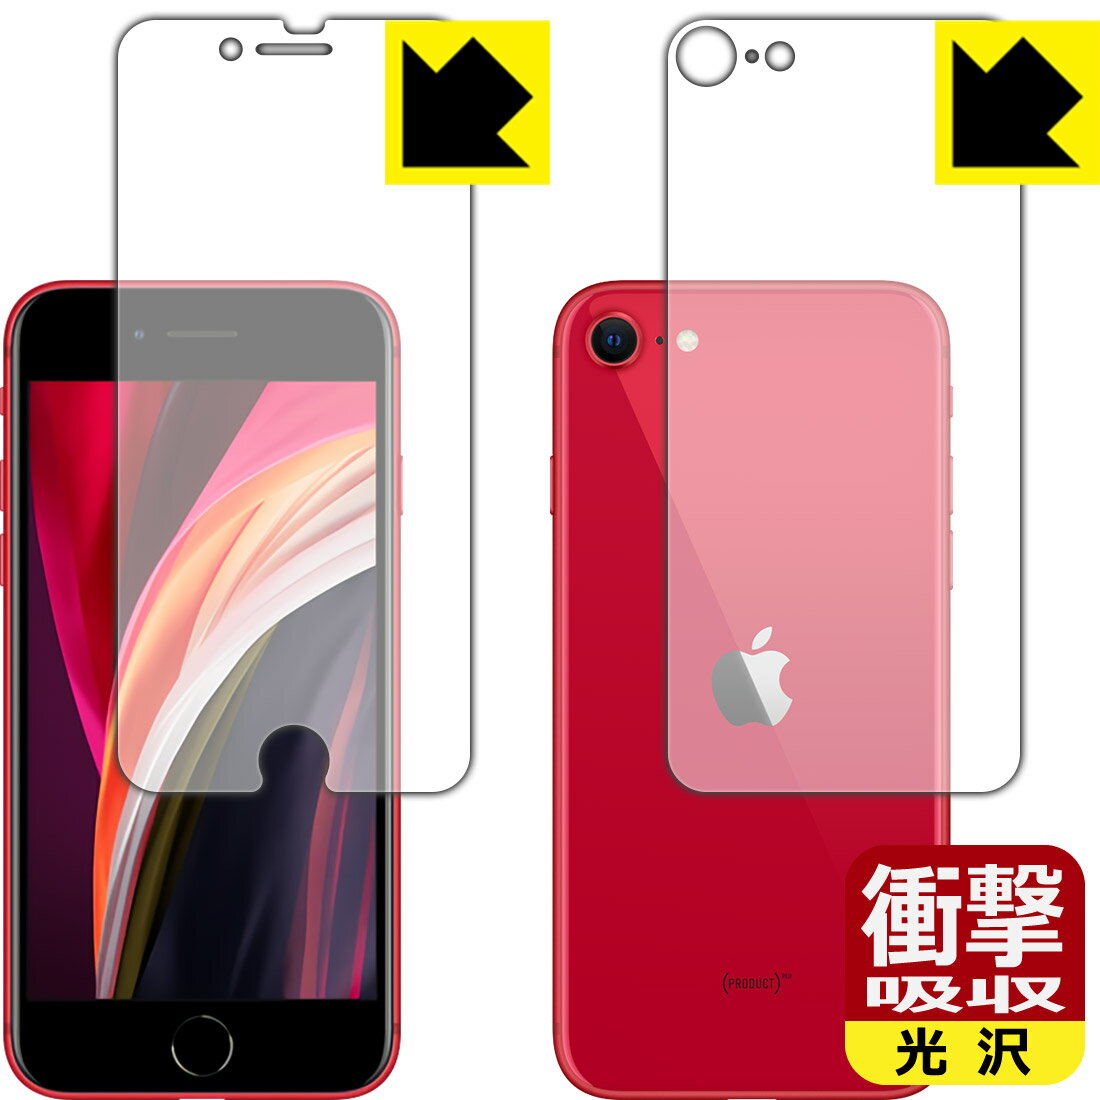 衝撃吸収【光沢】保護フィルム iPhone SE (第2世代) 両面セット 【O型】 日本製 自社製造直販